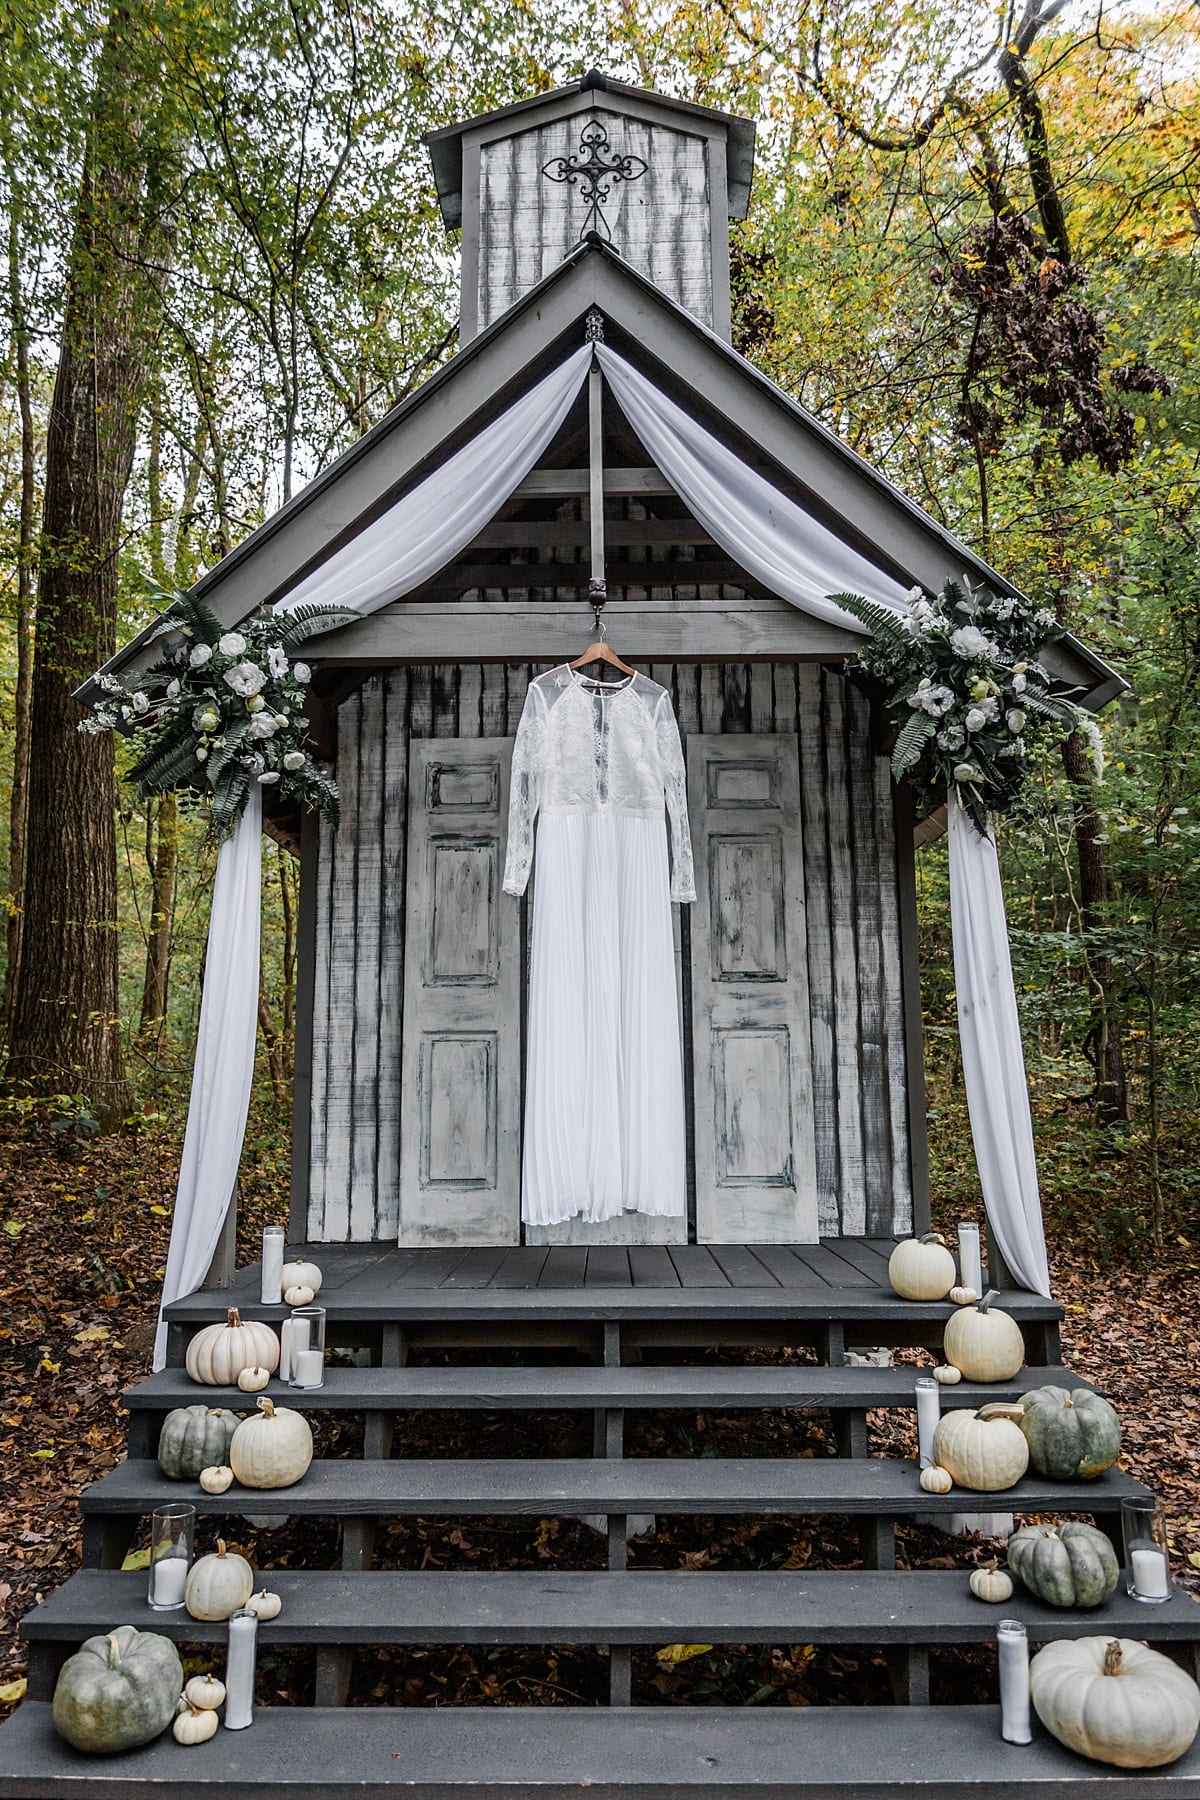 smoky mountain wedding chapel